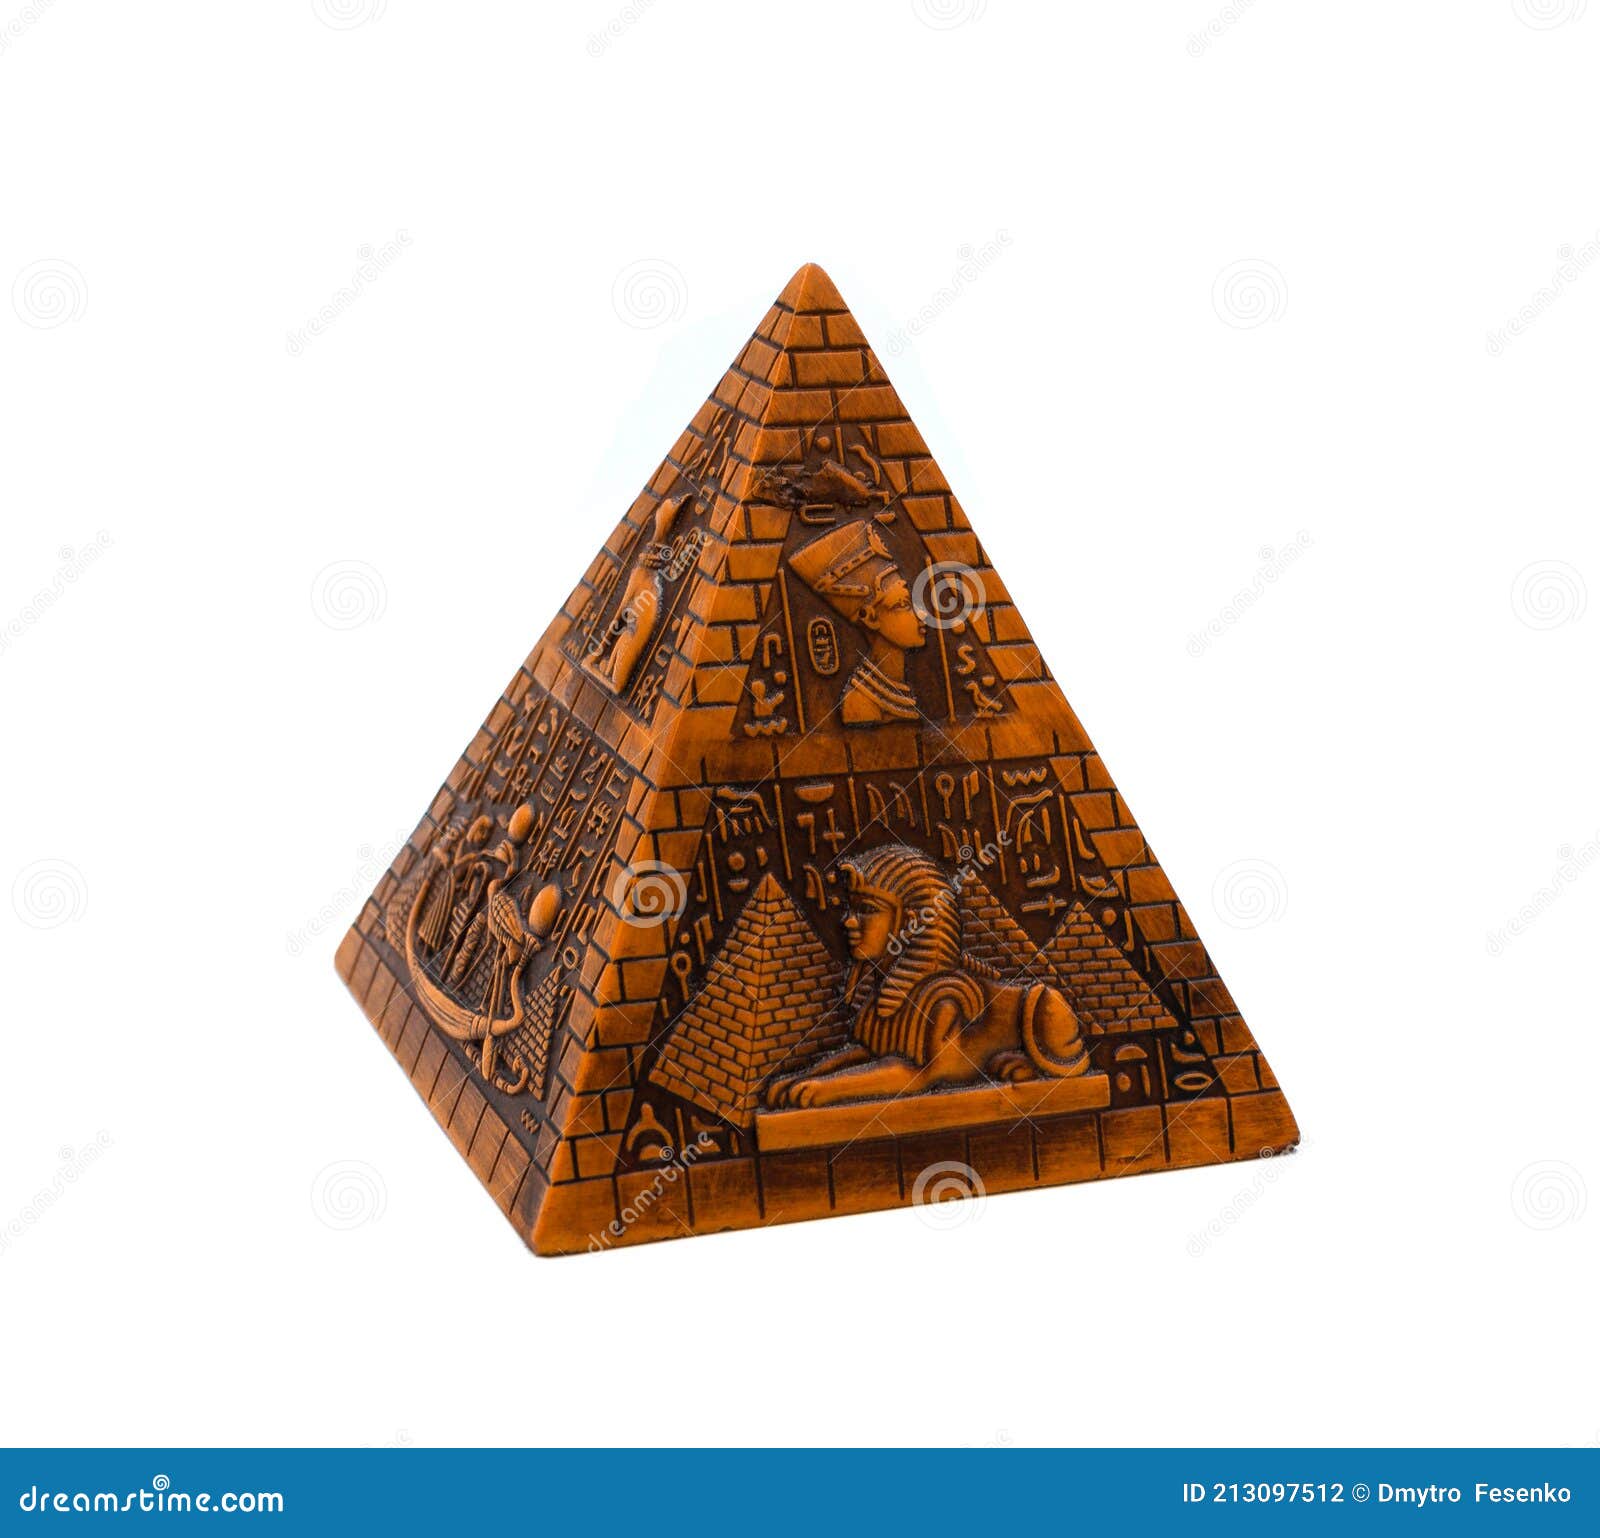 Souvenir Figurine of the Egyptian Pyramid Stock Photo - Image of ...